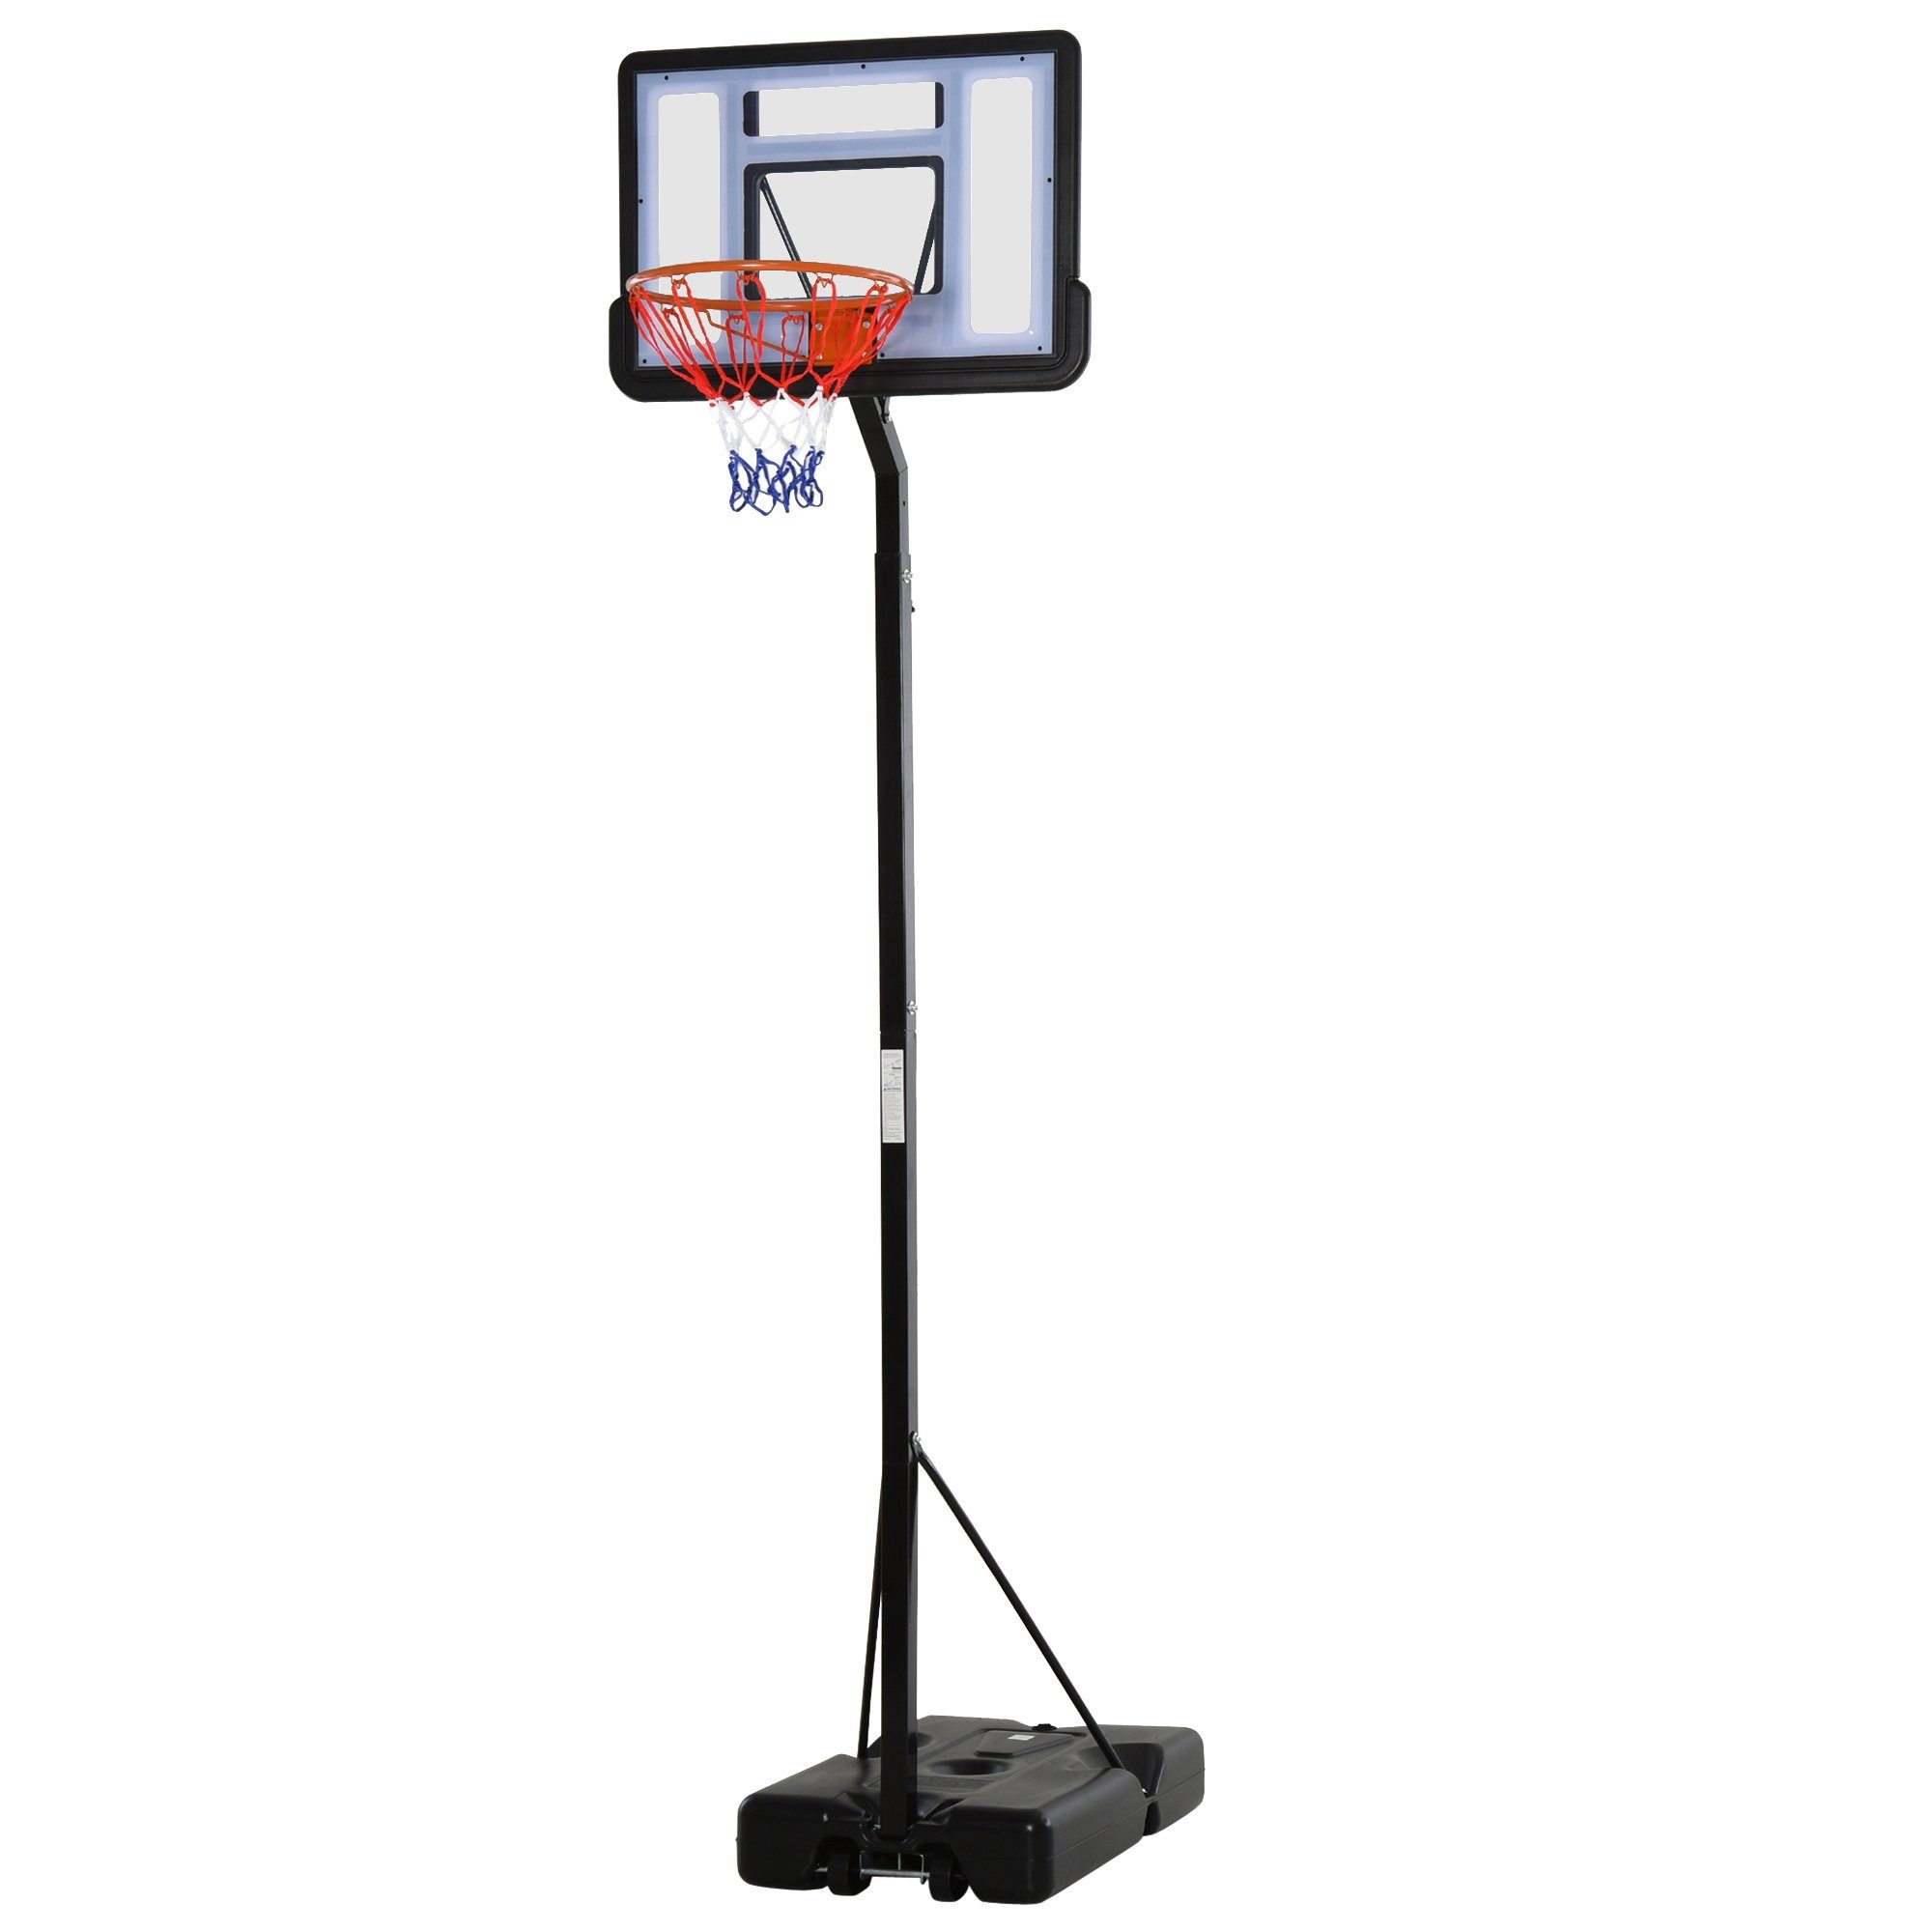 HOMCOM Basketballständer Basketballkorb Ständer mit 2 Rädern höhenverstellbar 